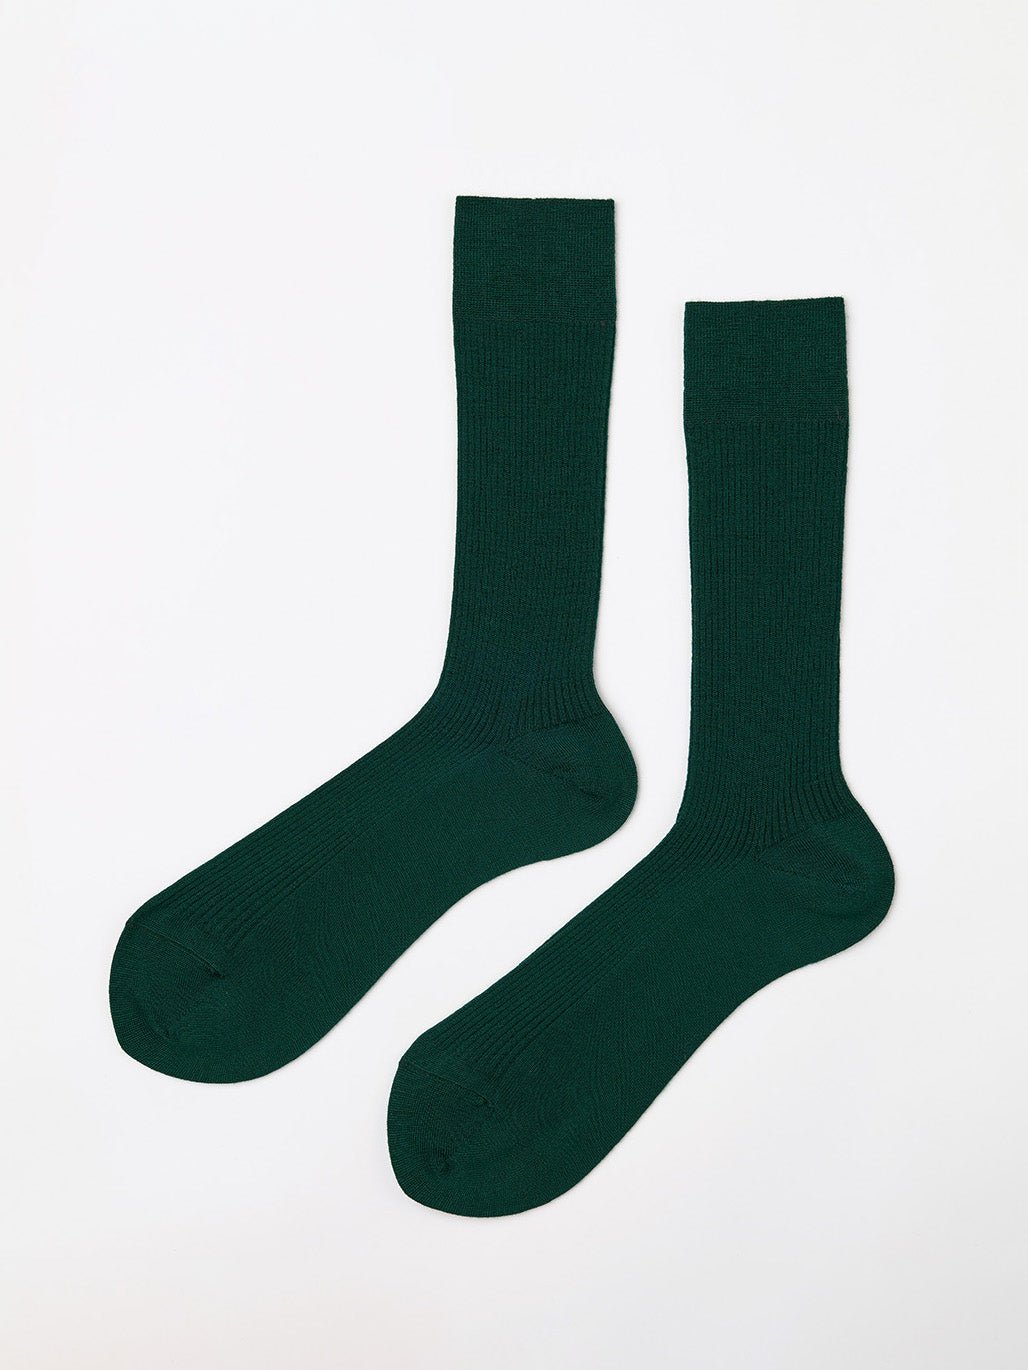 Classy Socks Merino Wool Moss